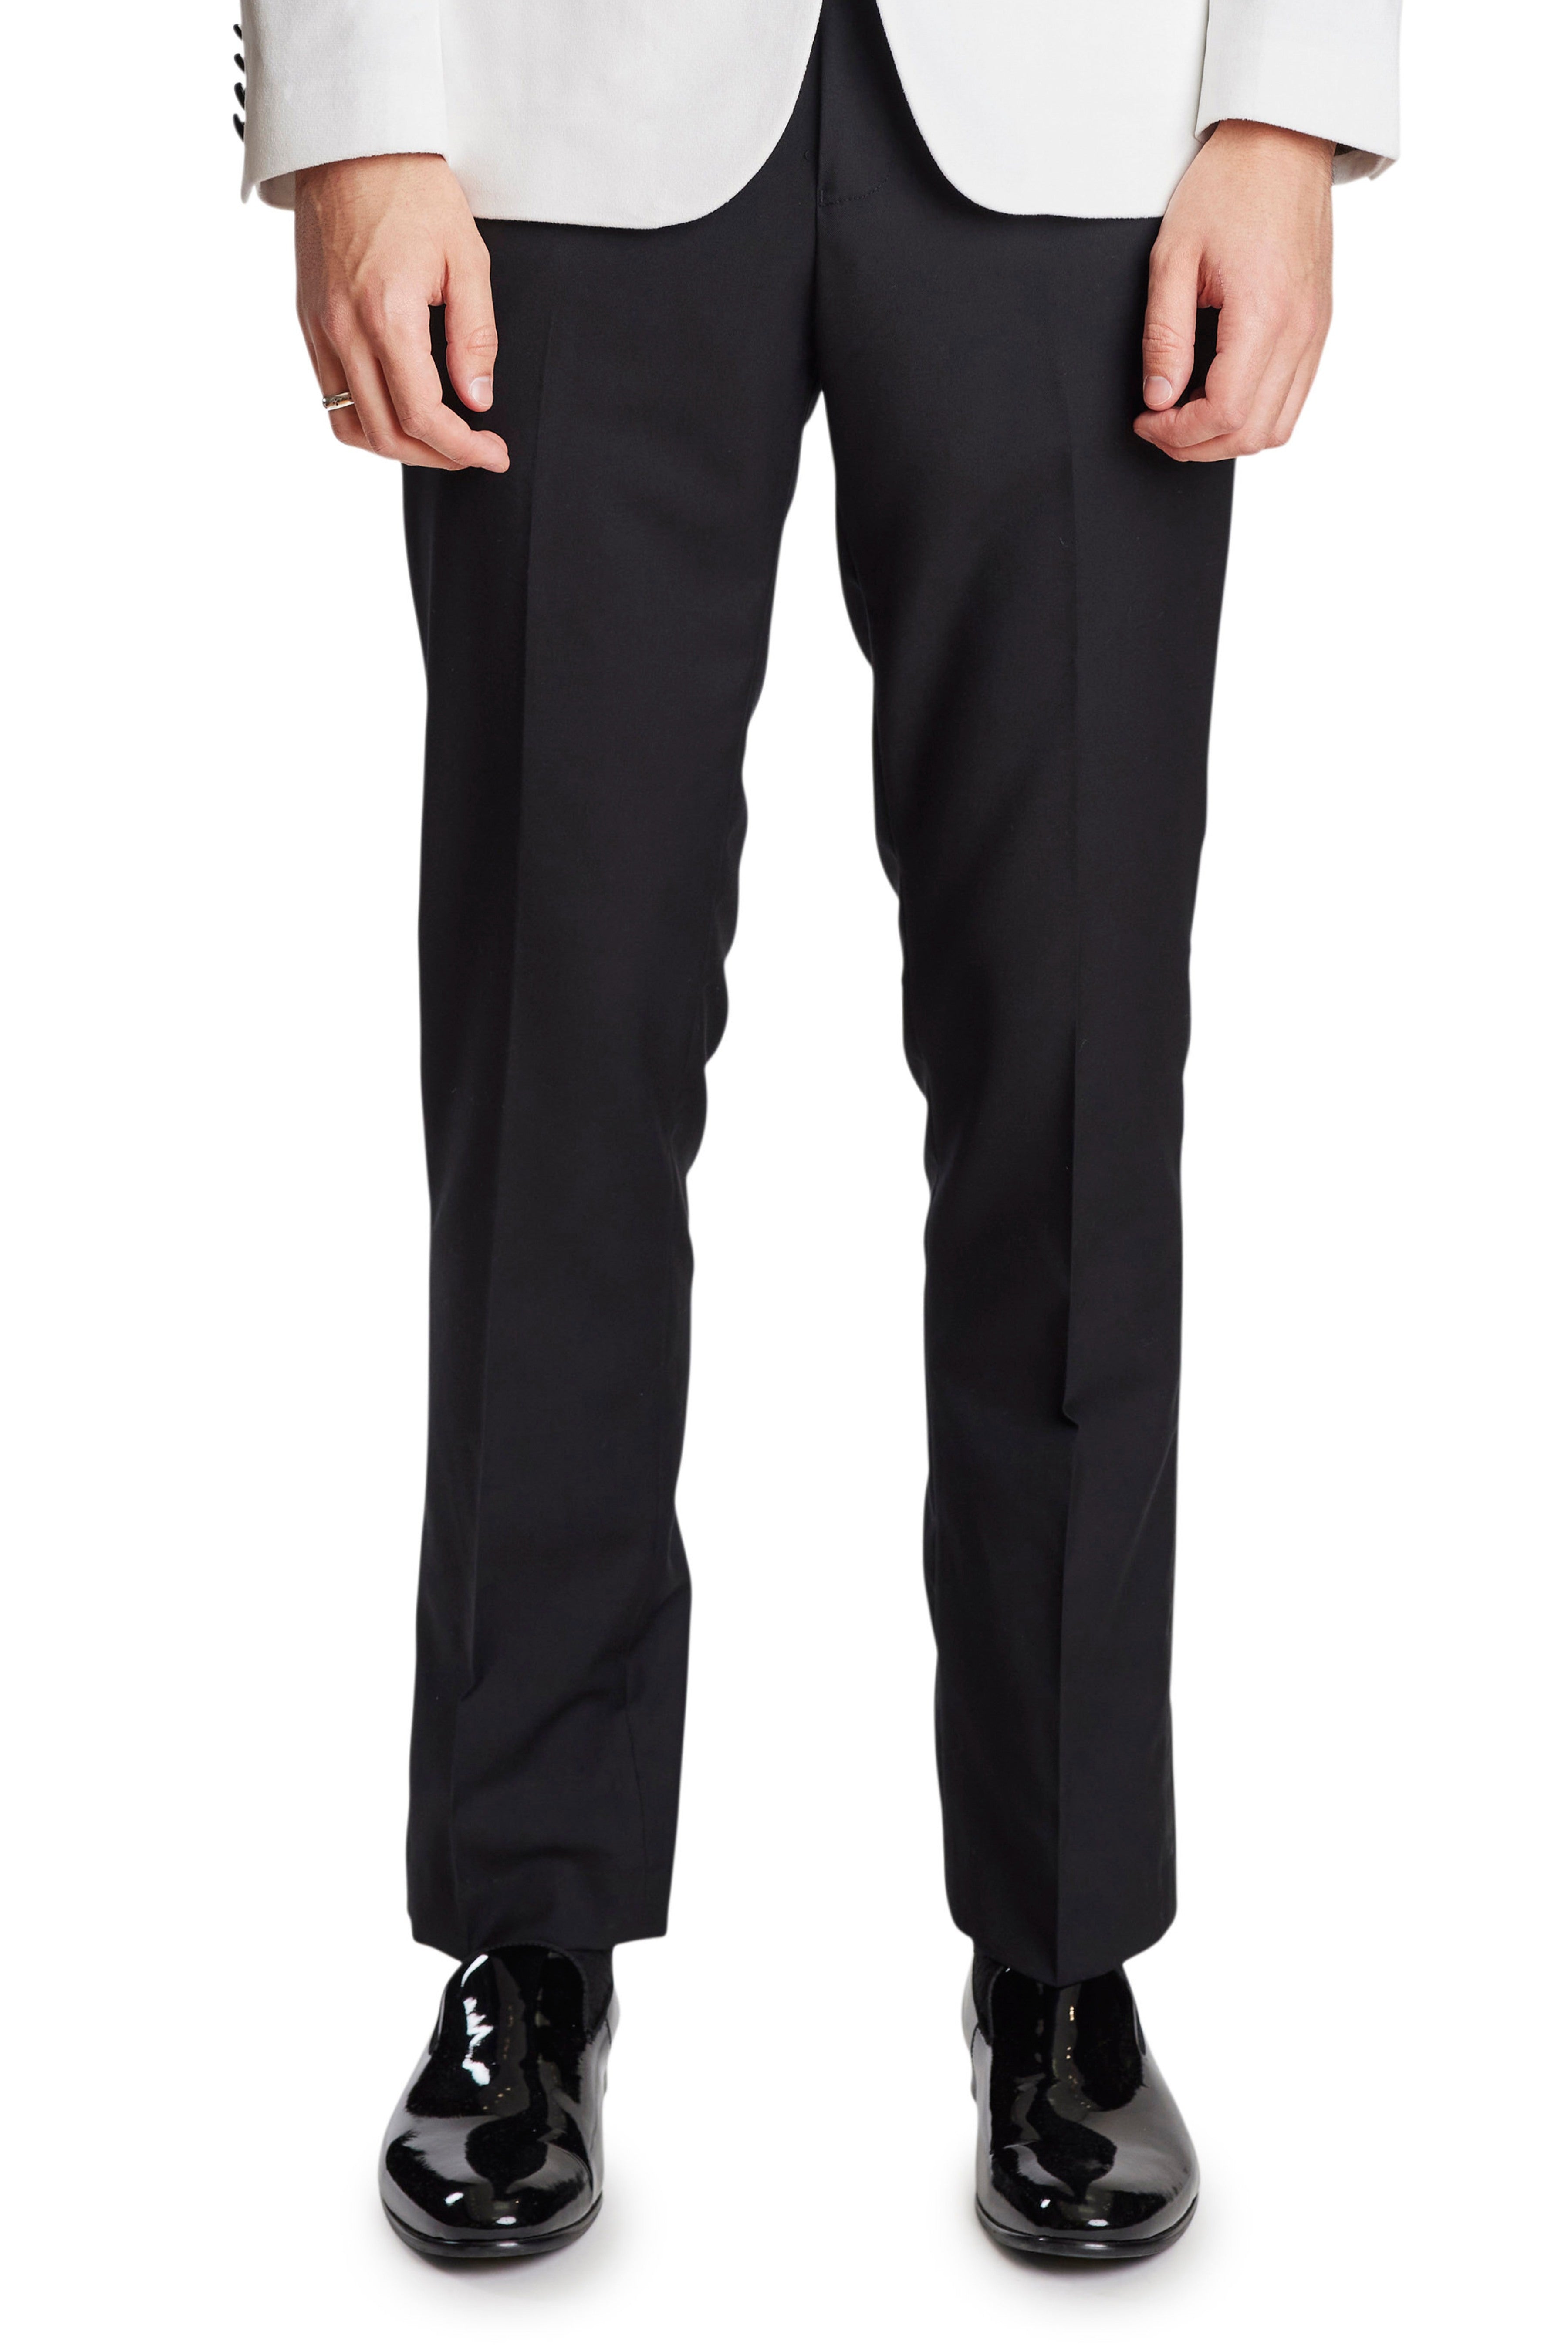 Black Posh Suit Pants (Final Sale) - Verafied New York